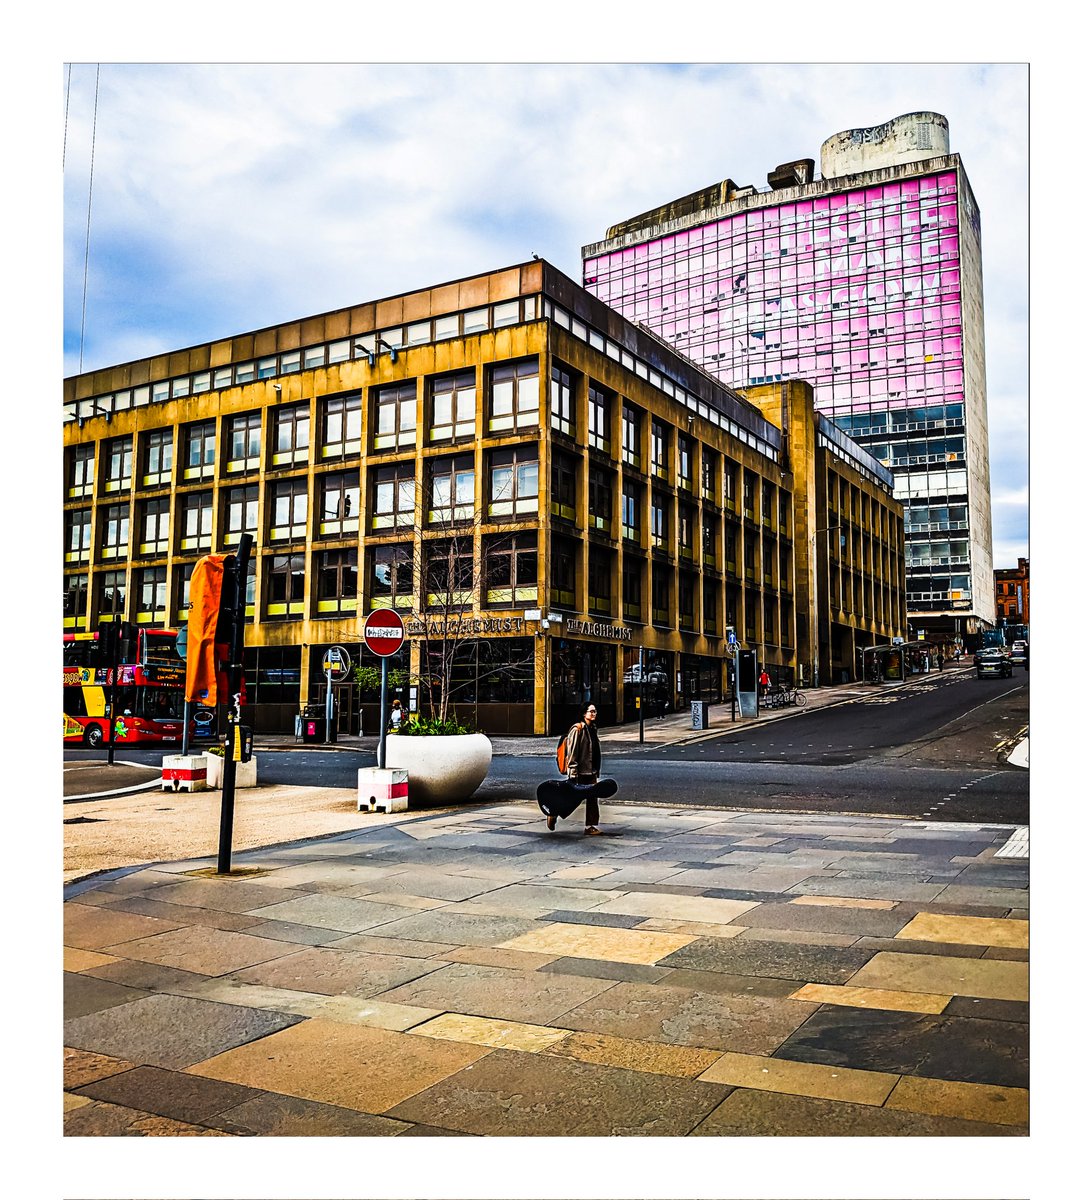 Glasgow - Google Pixel shots.

#Glasgow #Streetphotography #Google #pixel6a #TeamPixel #Contrast #GeorgeSquare #Scotland  #mobilephonephotography